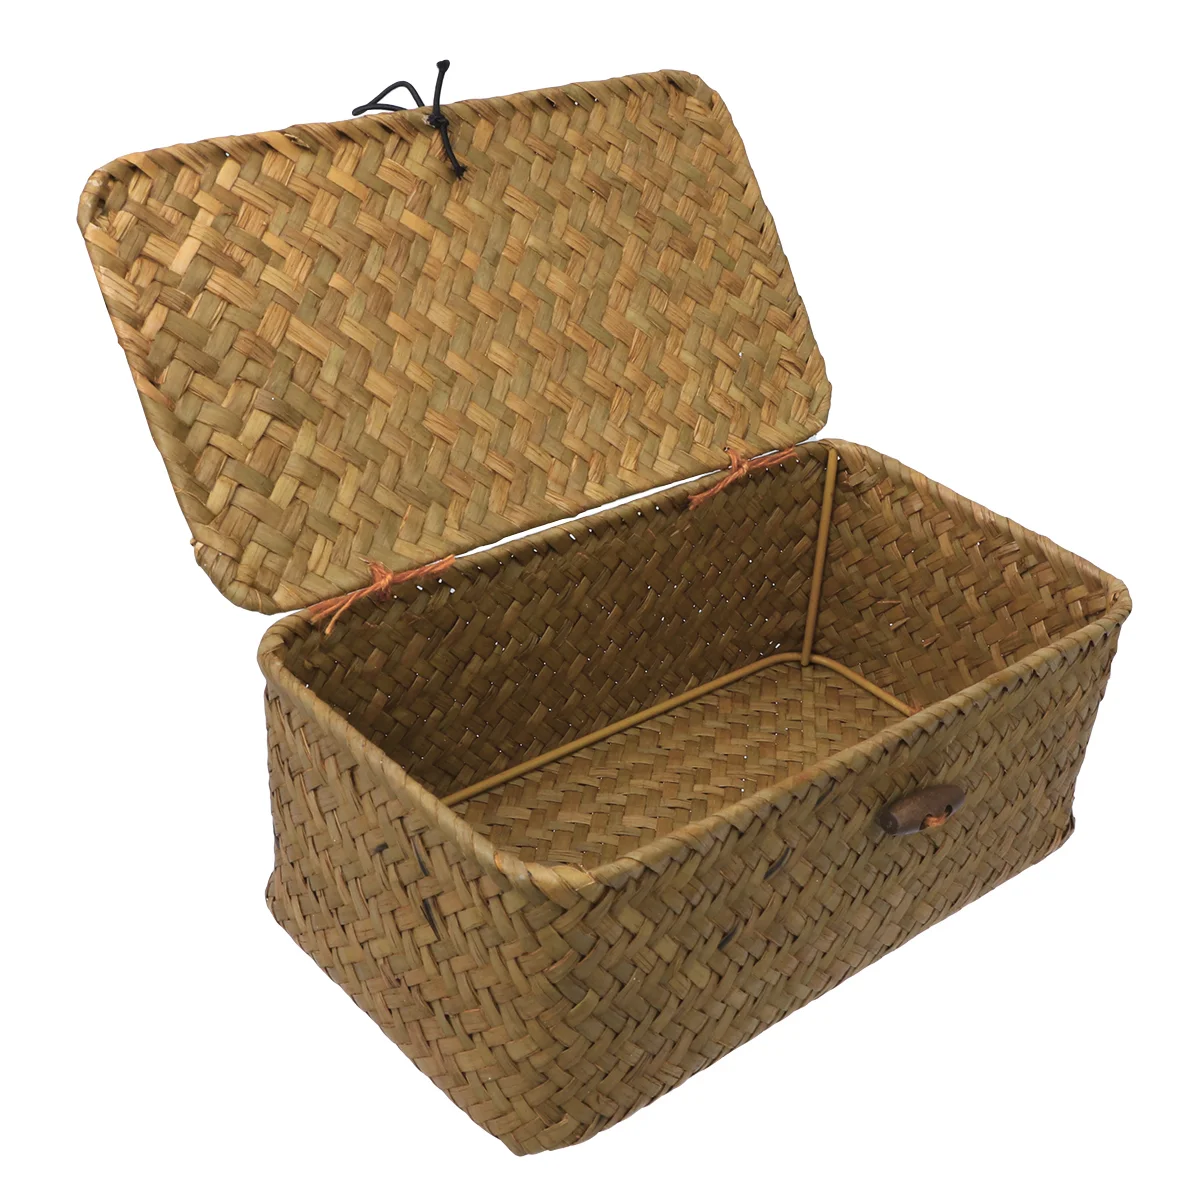 

Basket Storage Lid Woven Baskets Wicker Box Straw Rattan Lids Boxes Decorative Sundries Bins Organizer Shelf Seagrass Organizing